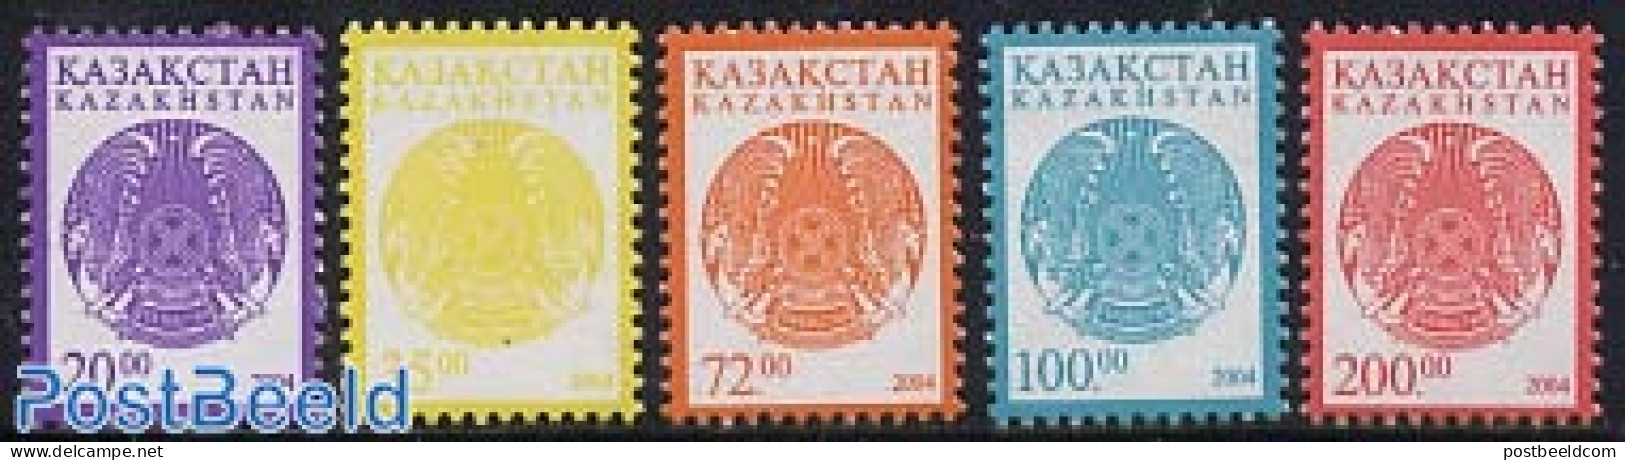 Kazakhstan 2004 Definitives 5v, Mint NH, History - Coat Of Arms - Kazakhstan